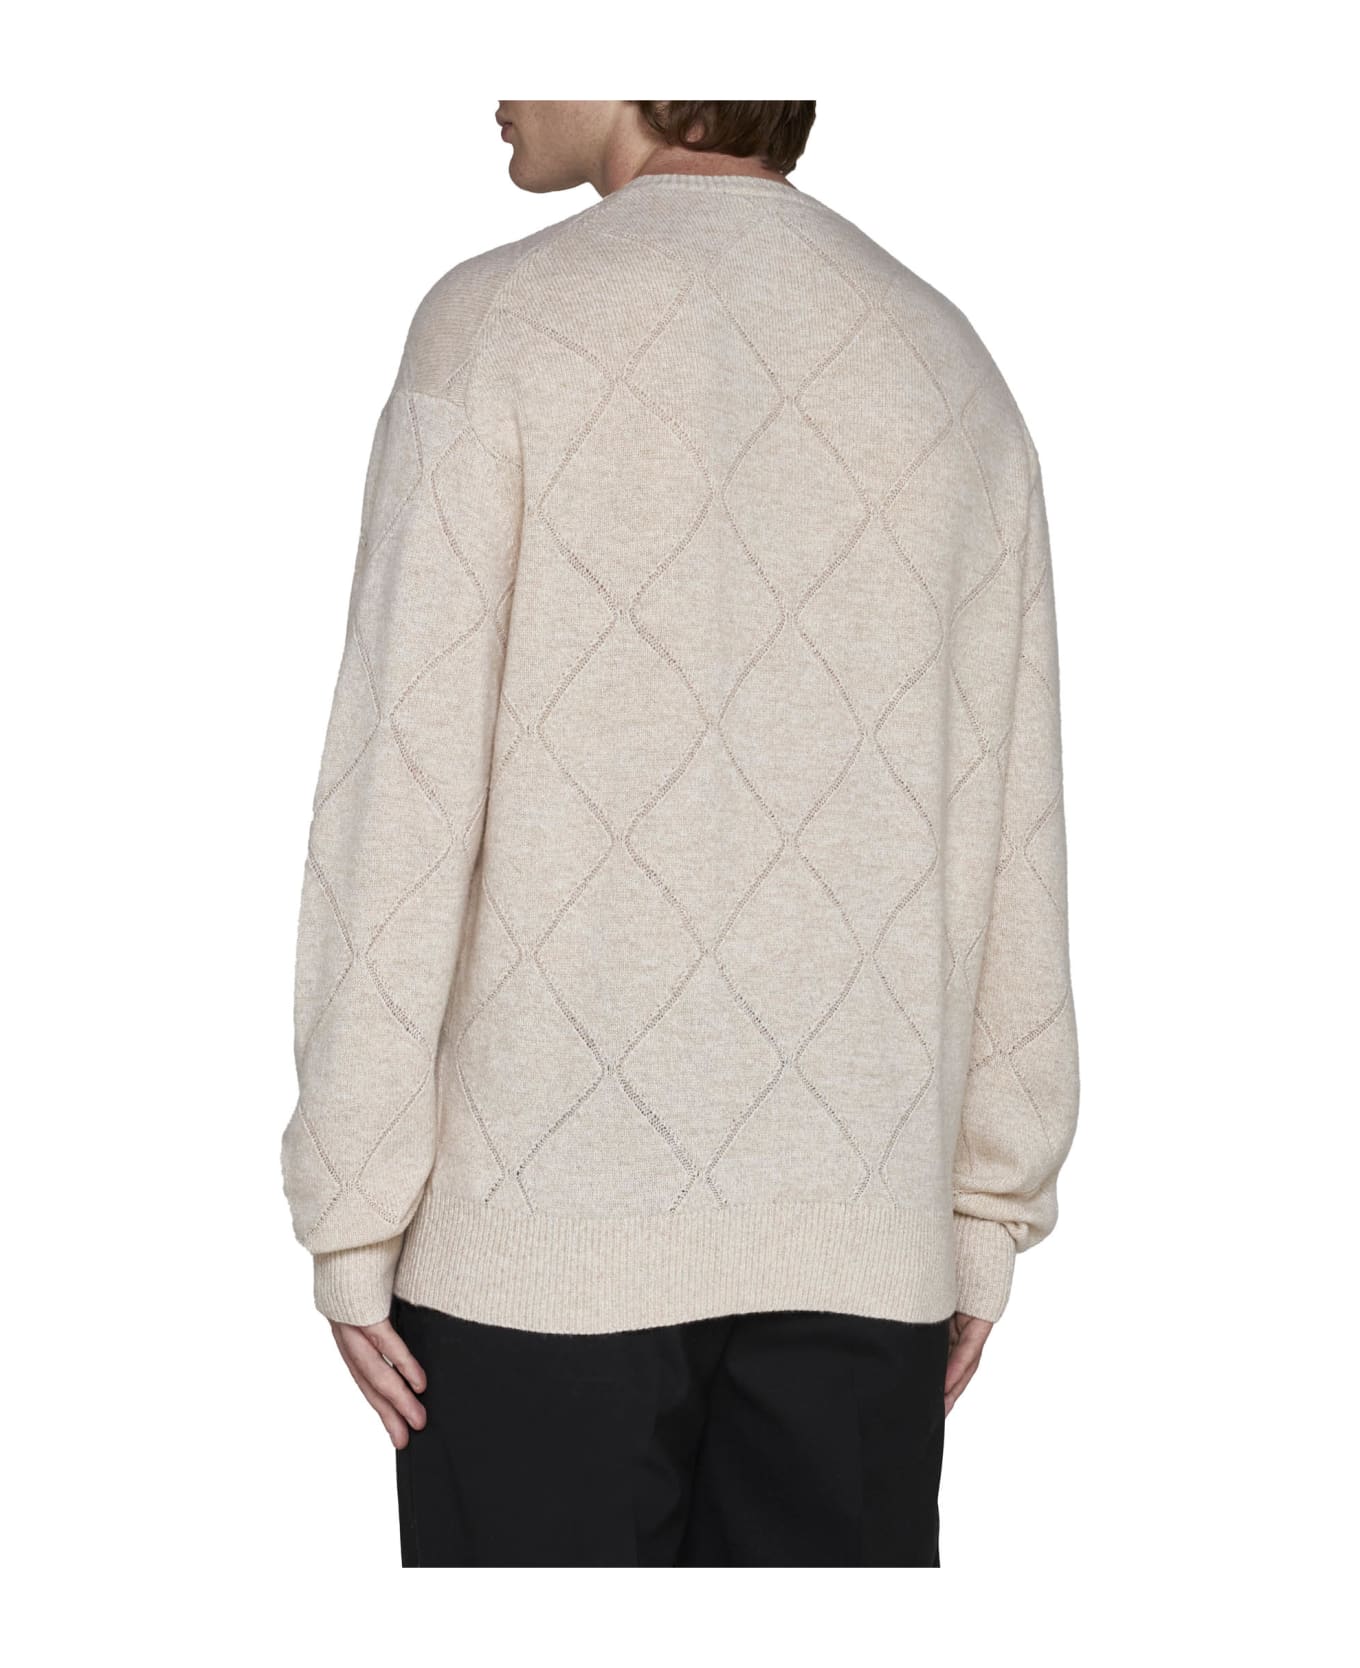 Neil Barrett Sweater - Sandstone